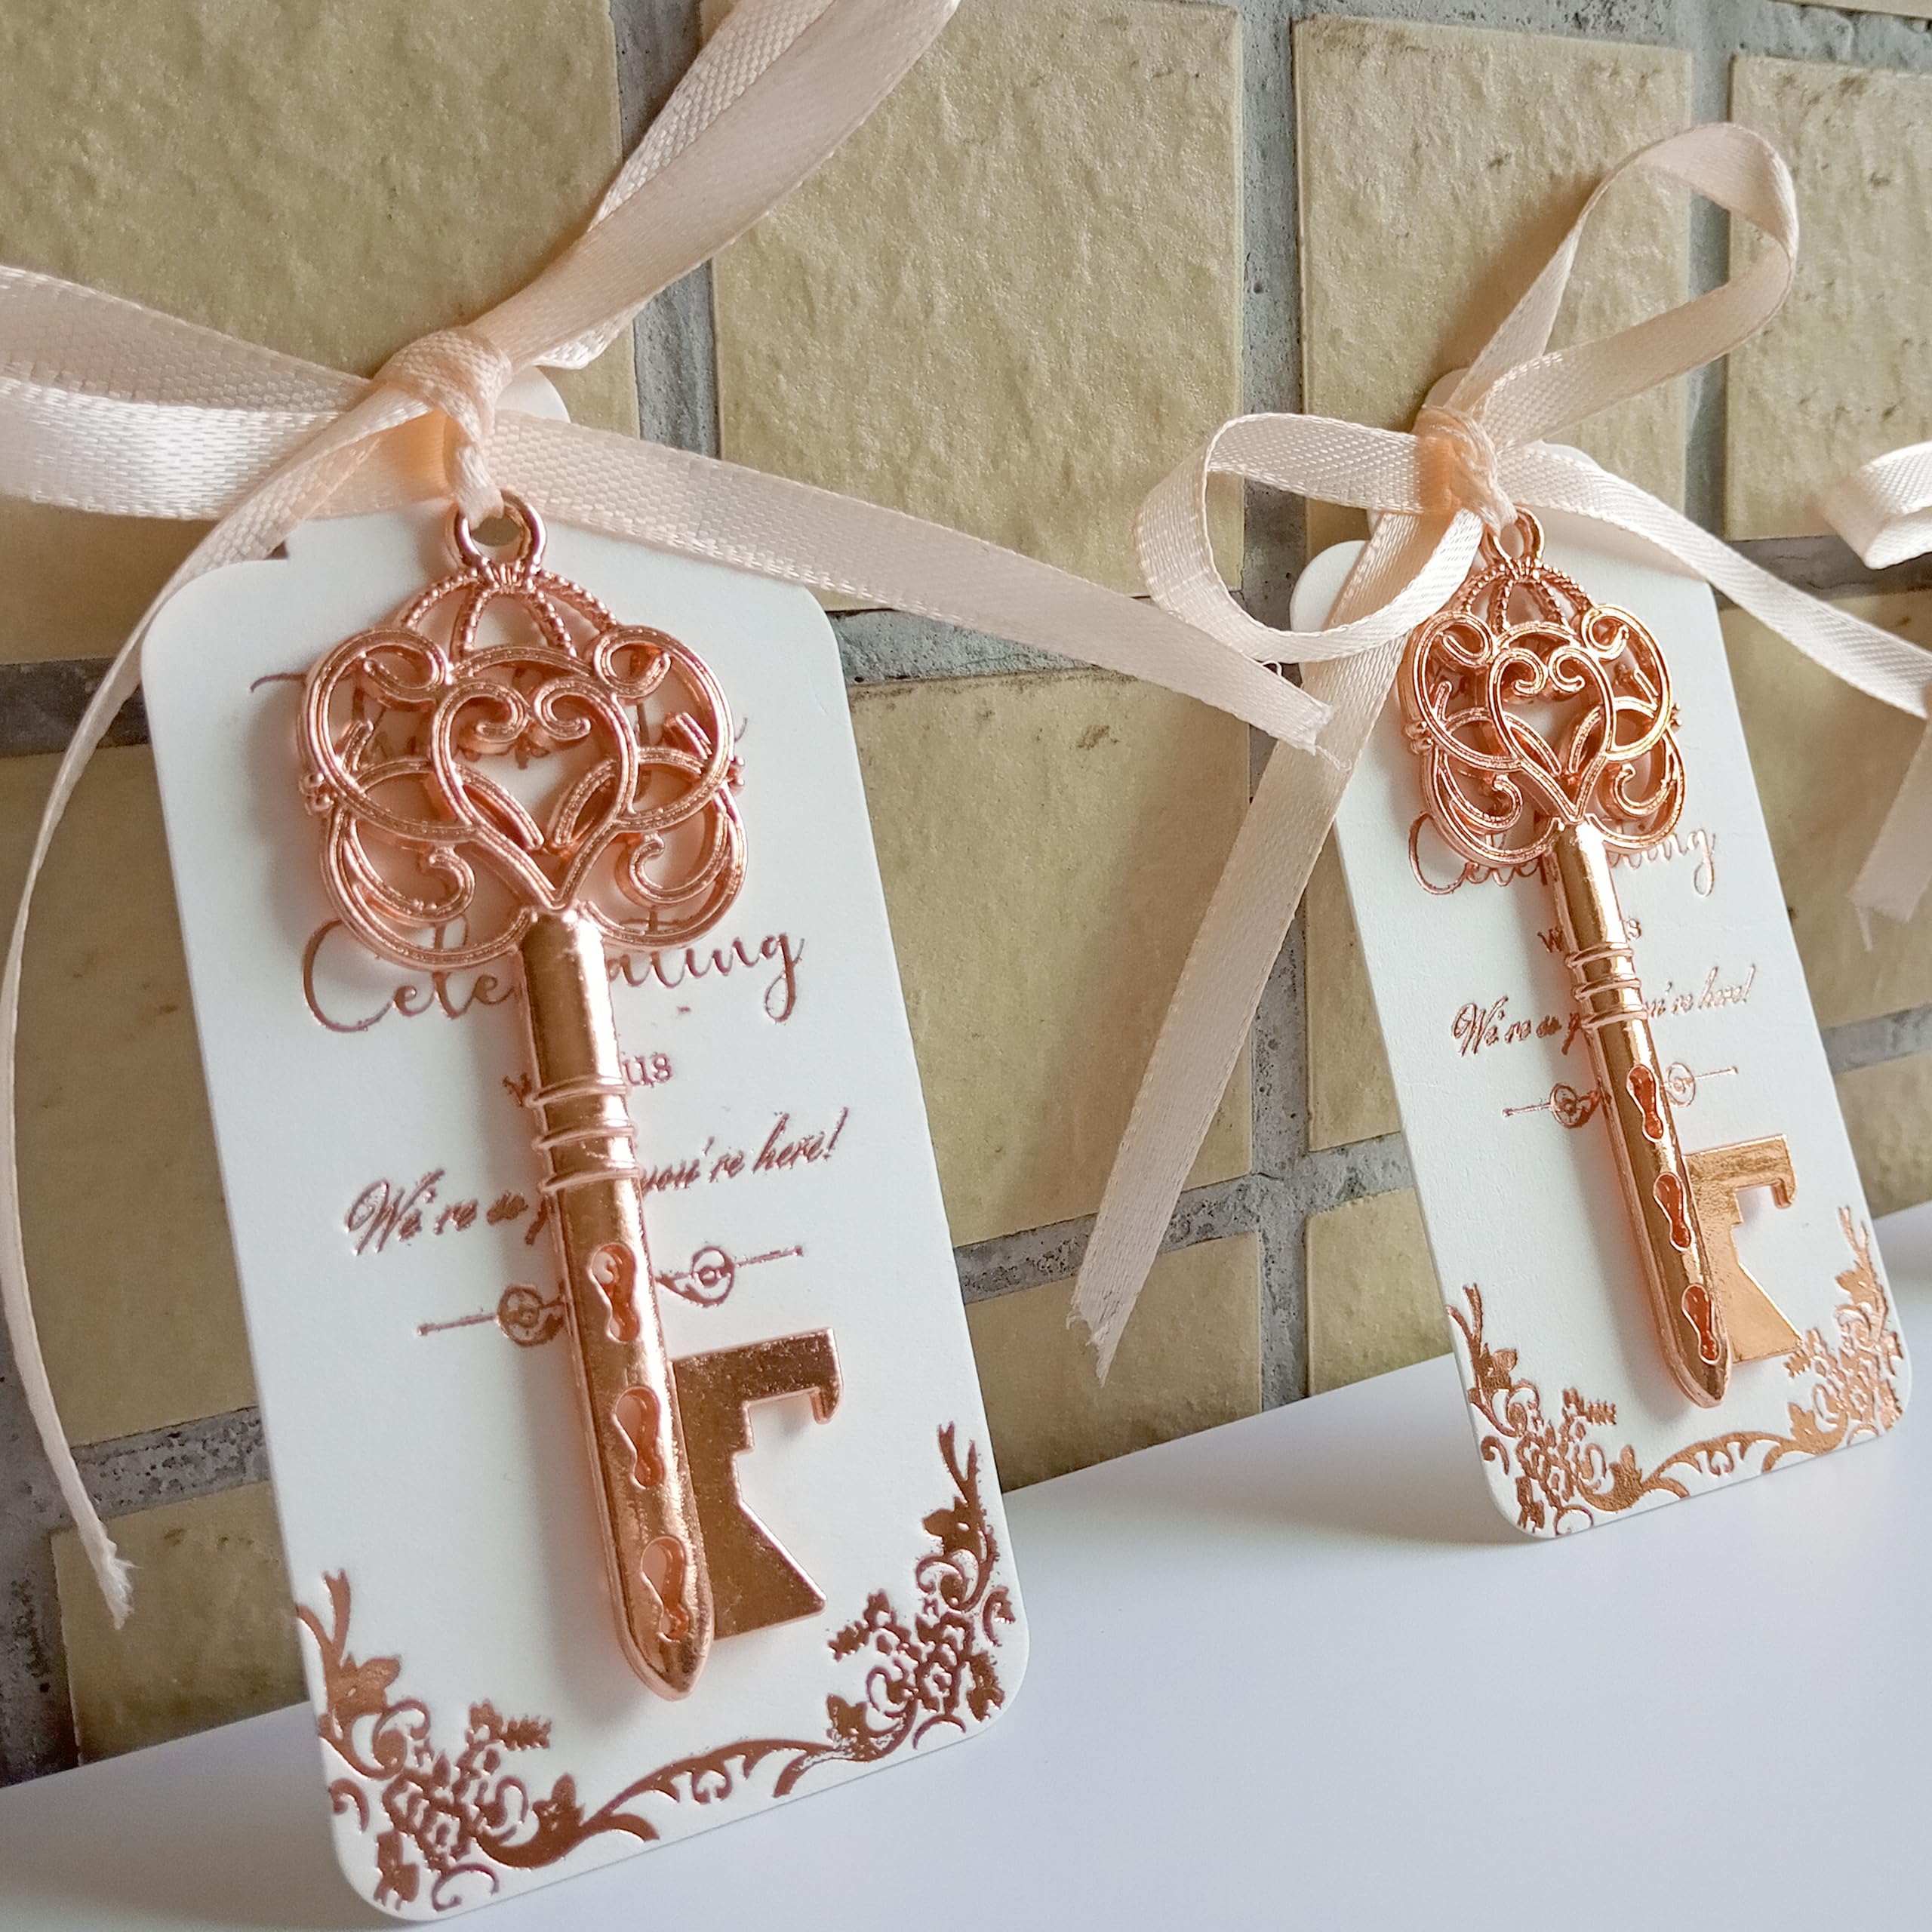 Efoxmoko 25 Rose Gold Metal Skeleton Key Bottle Opener Wedding Party Favors – with Rose Gold Foil White Tag & Light Peach Color Ribbon – Useful Bridal Shower Rustic Gift for Guests Bulk – Unassembled